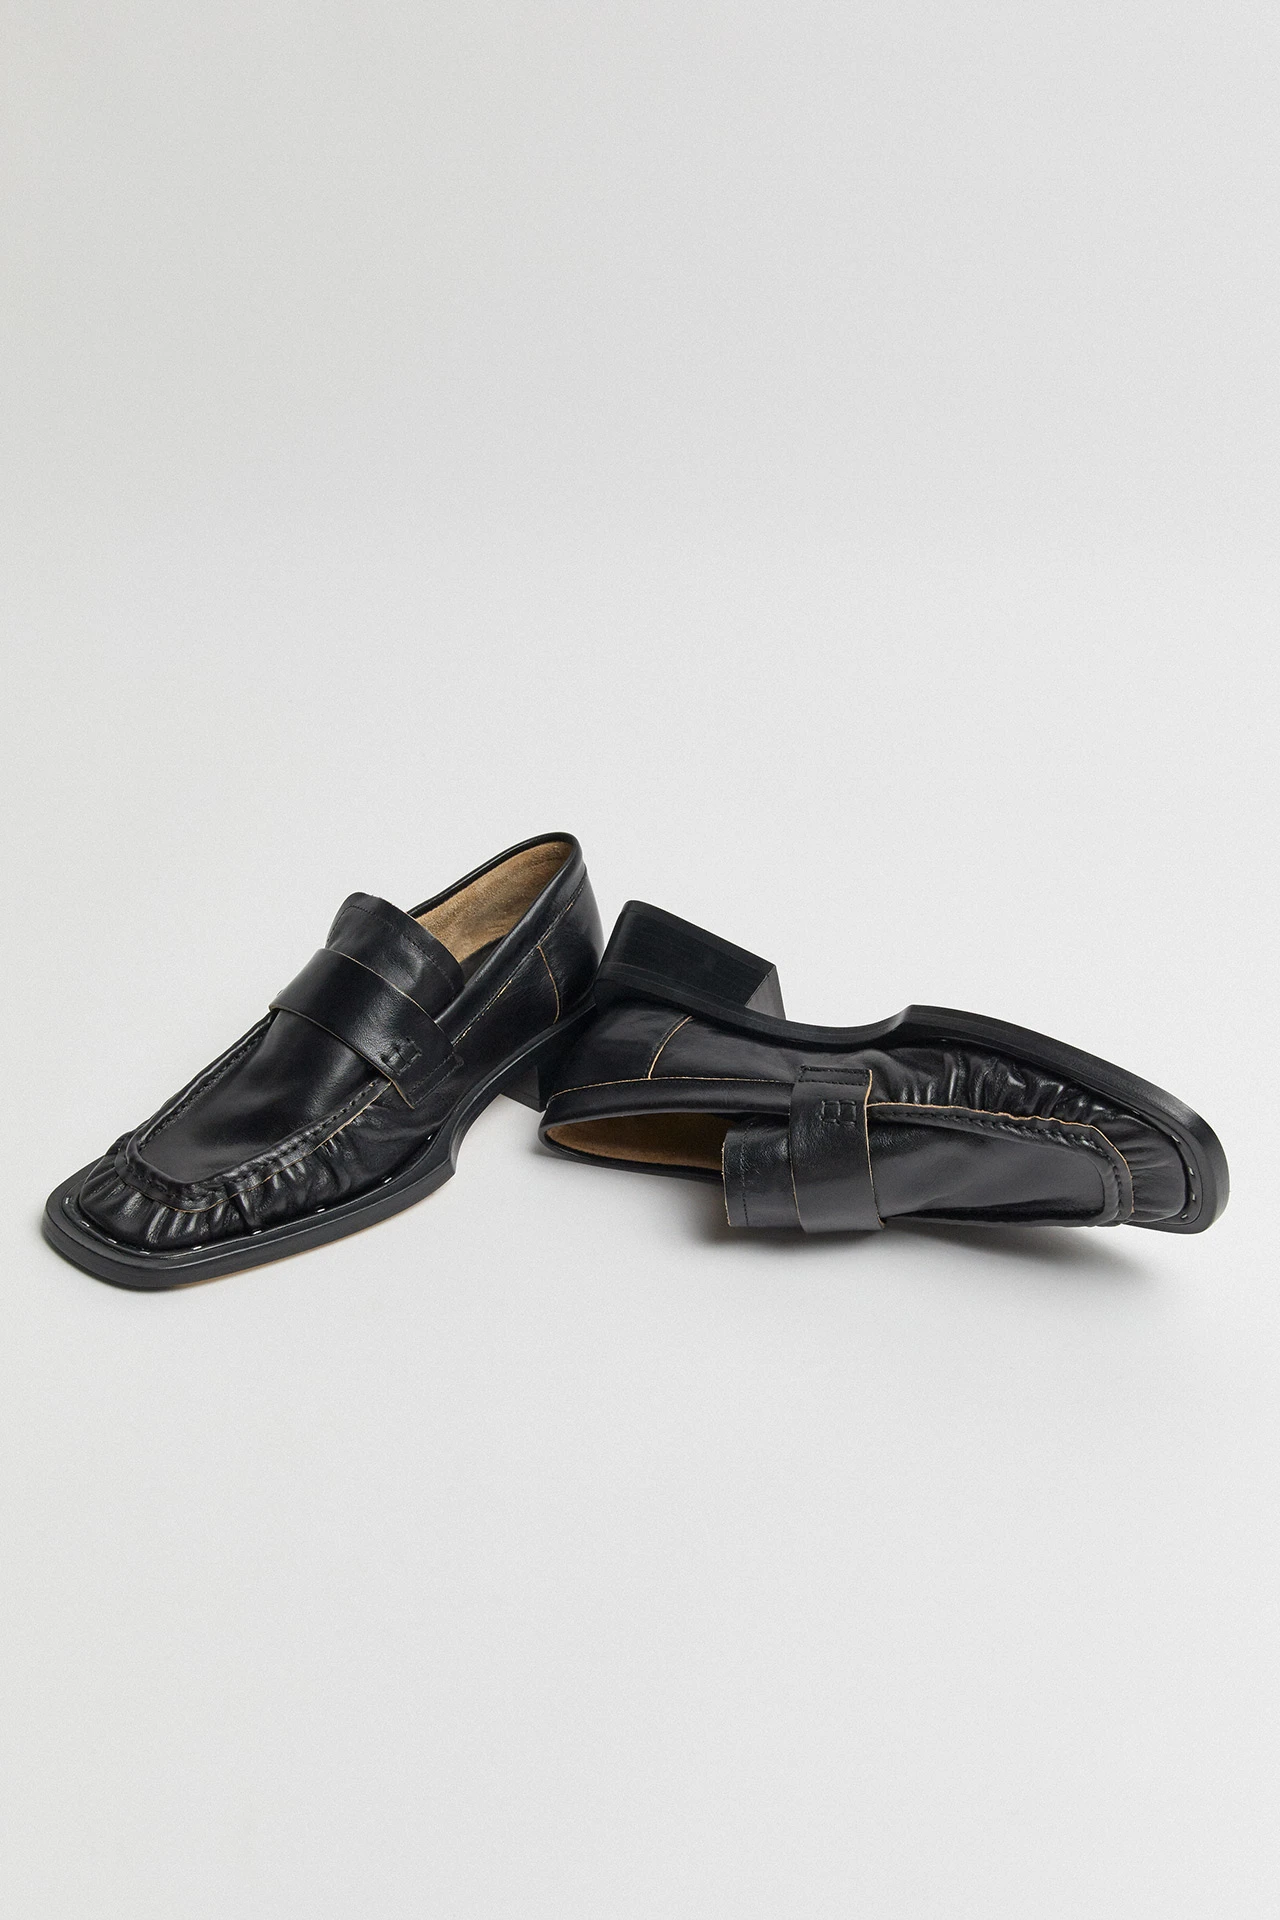 Miista-airi-black-loafers-02